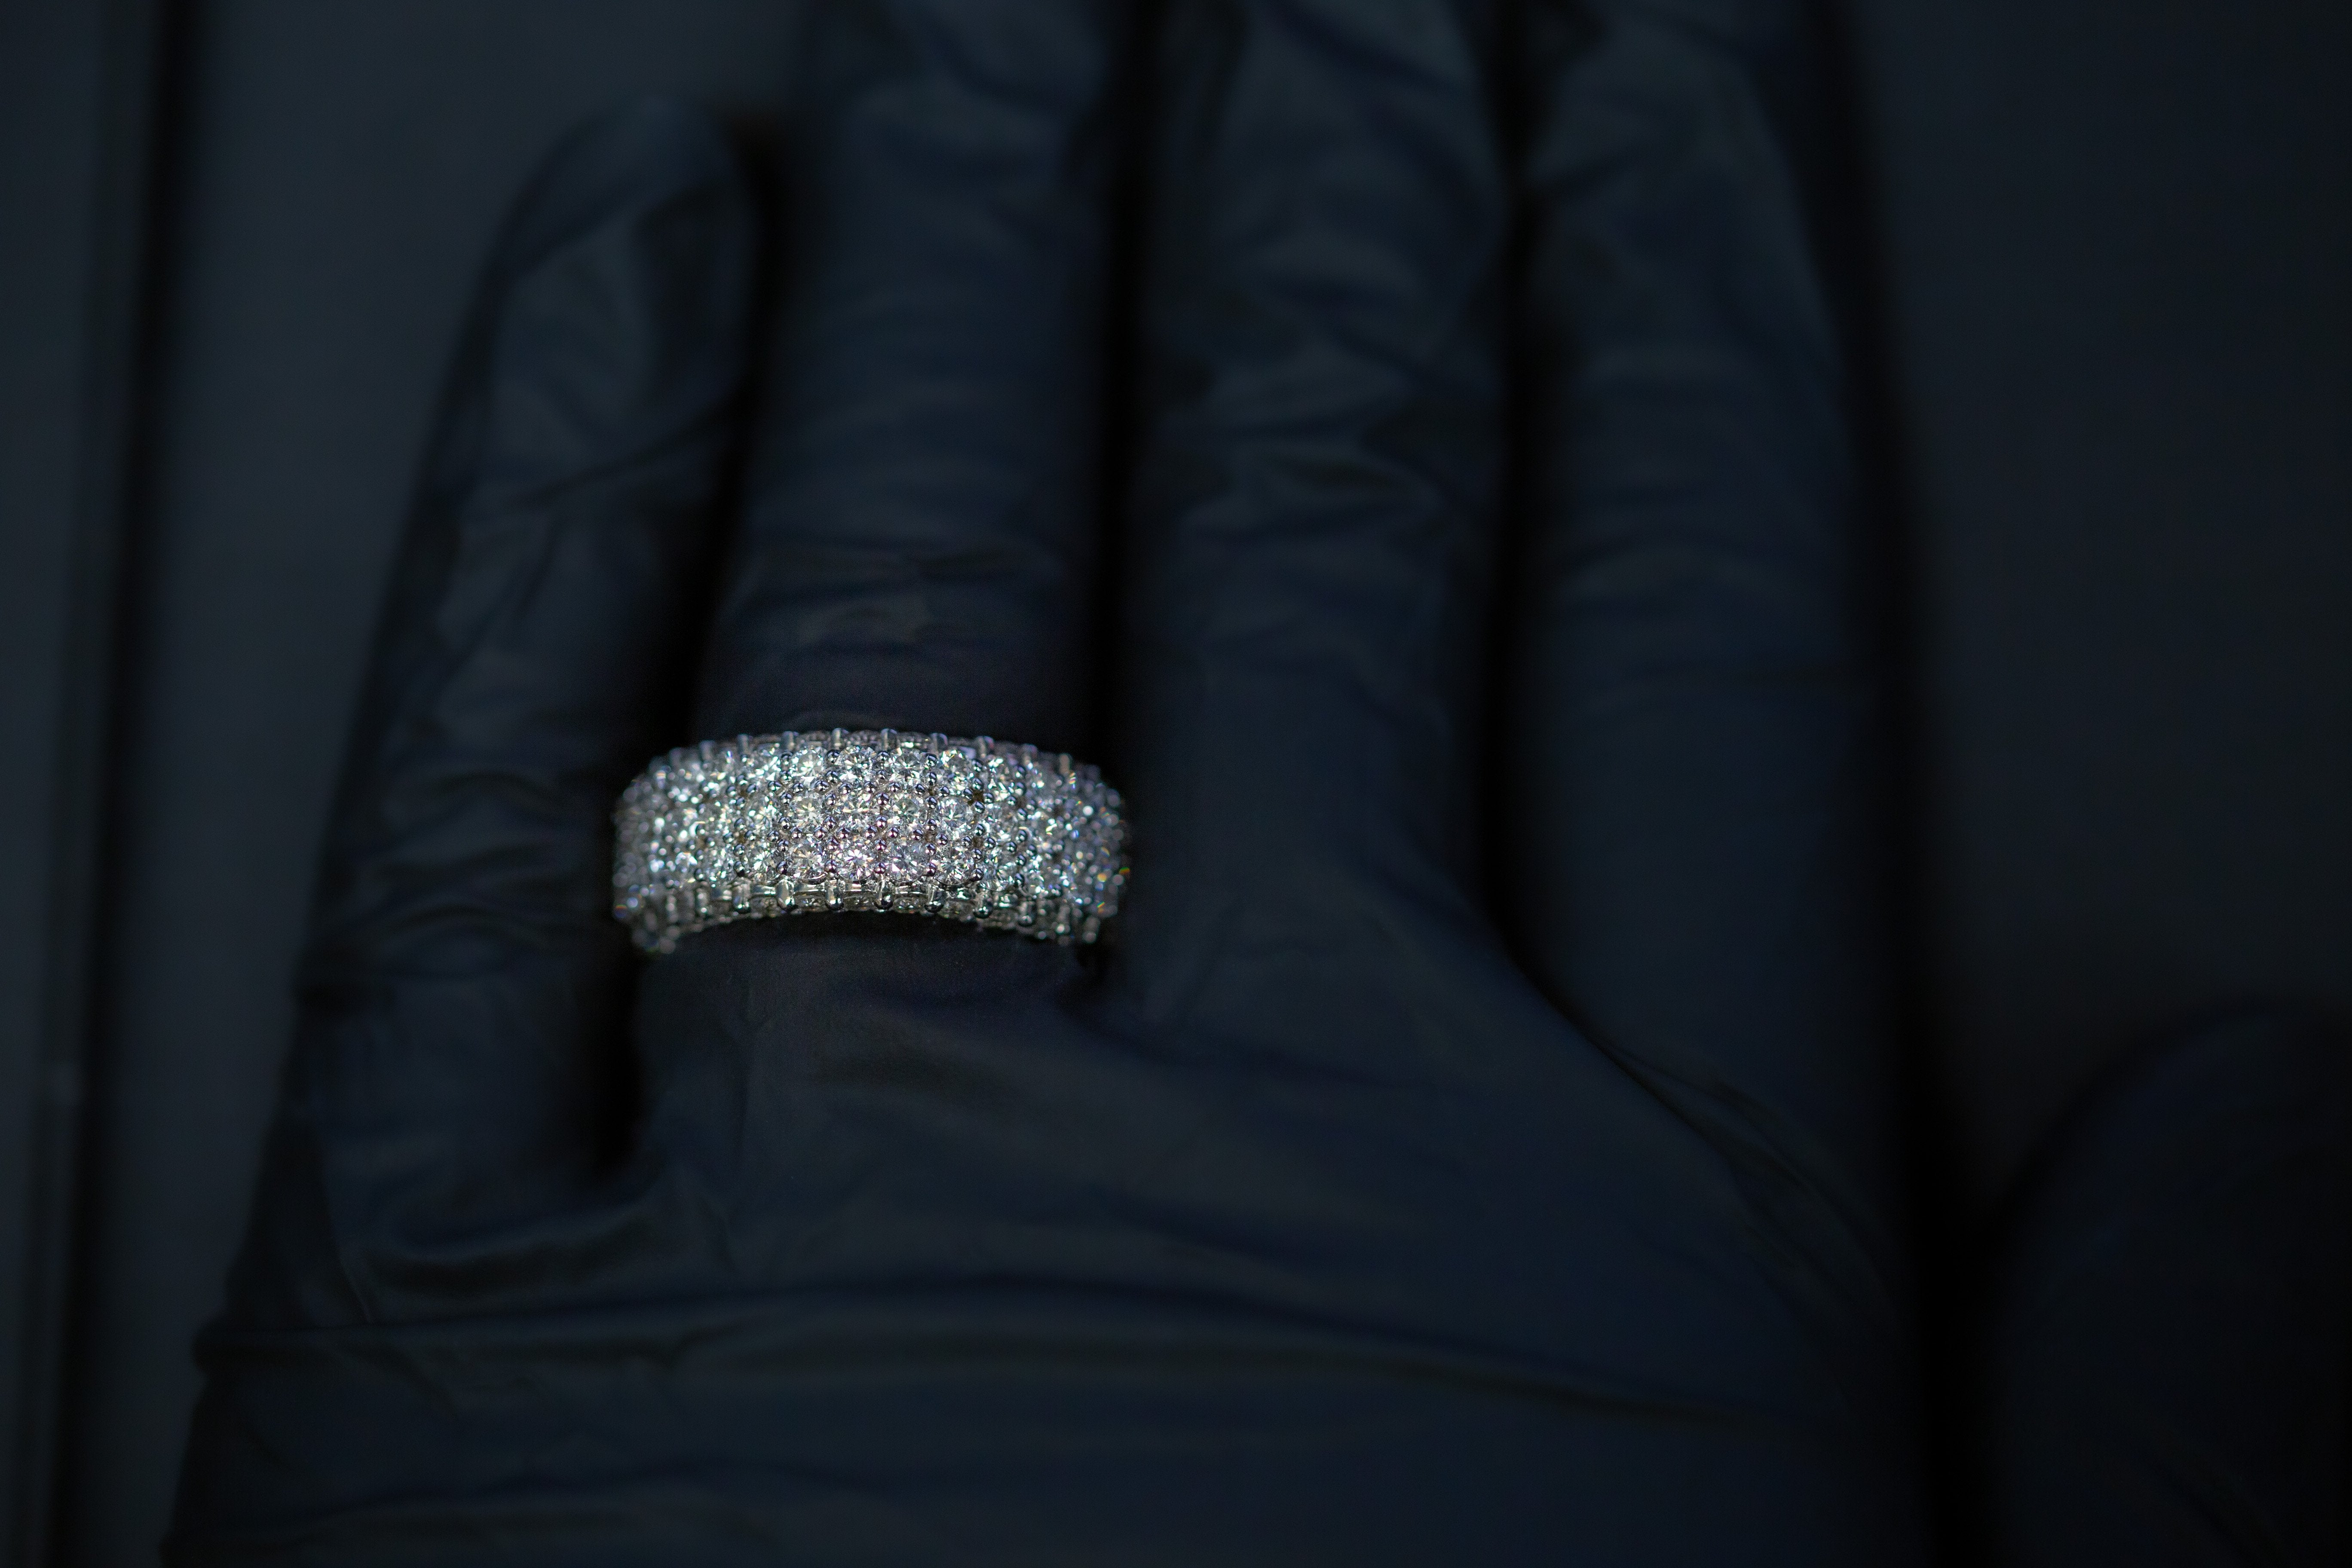 3.36CT Diamond Ring in 10K Gold - White Carat Diamonds 